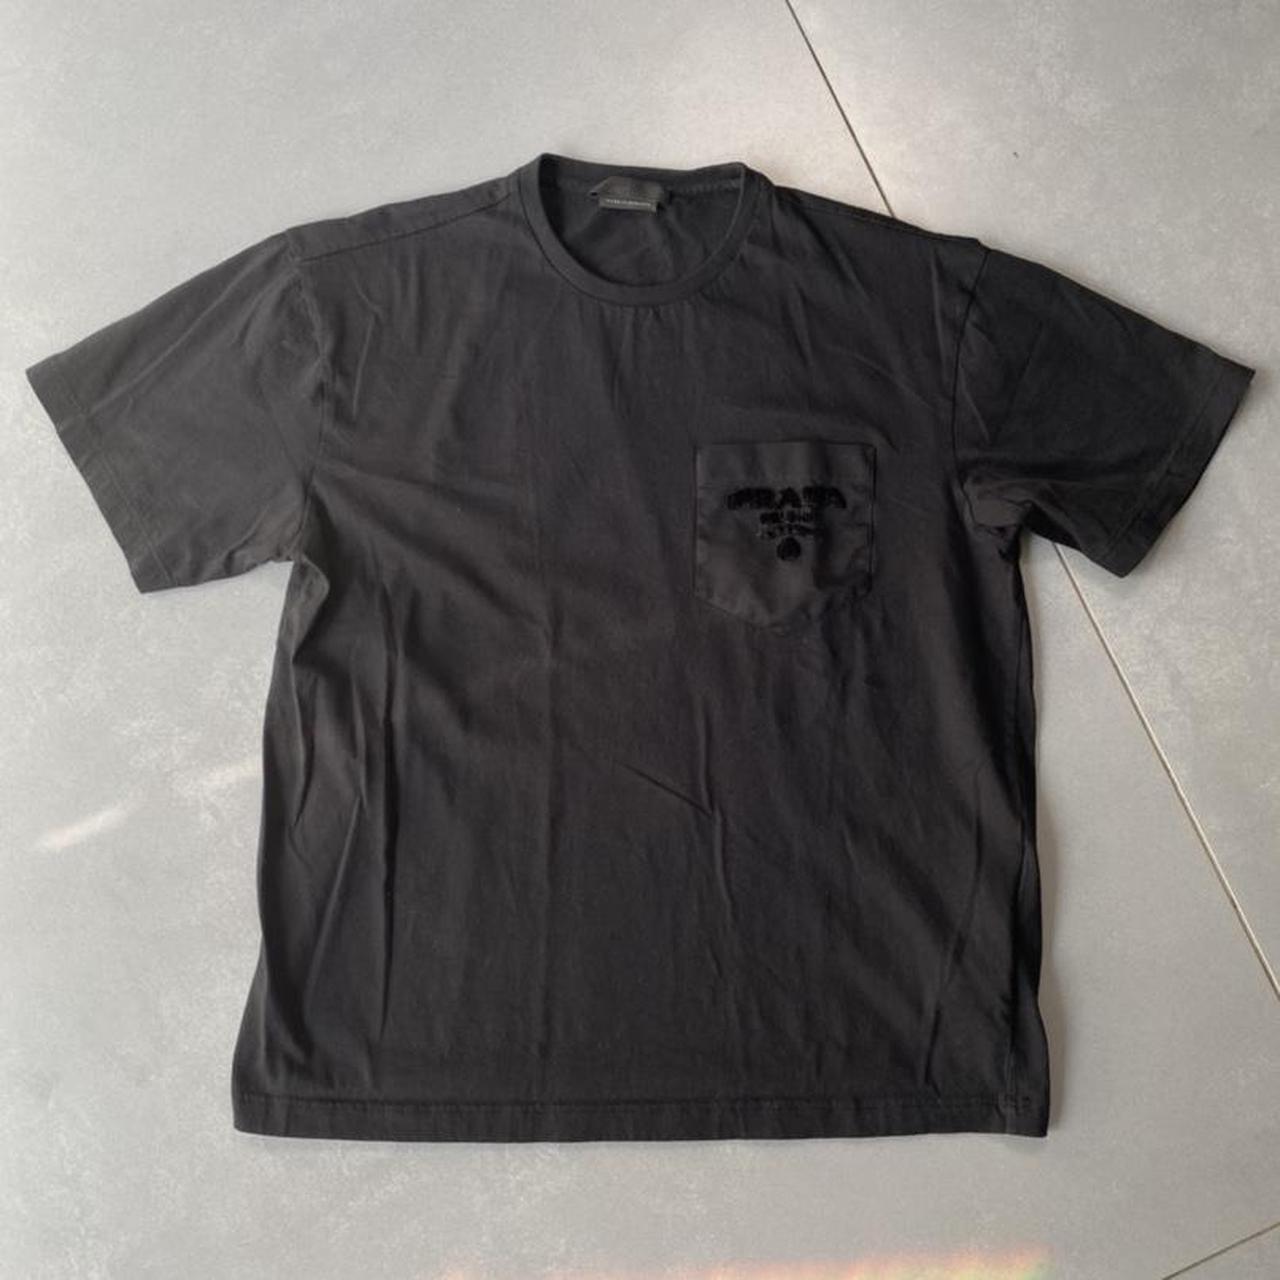 Prada chenille logo pocket t-shirt in black made in... - Depop